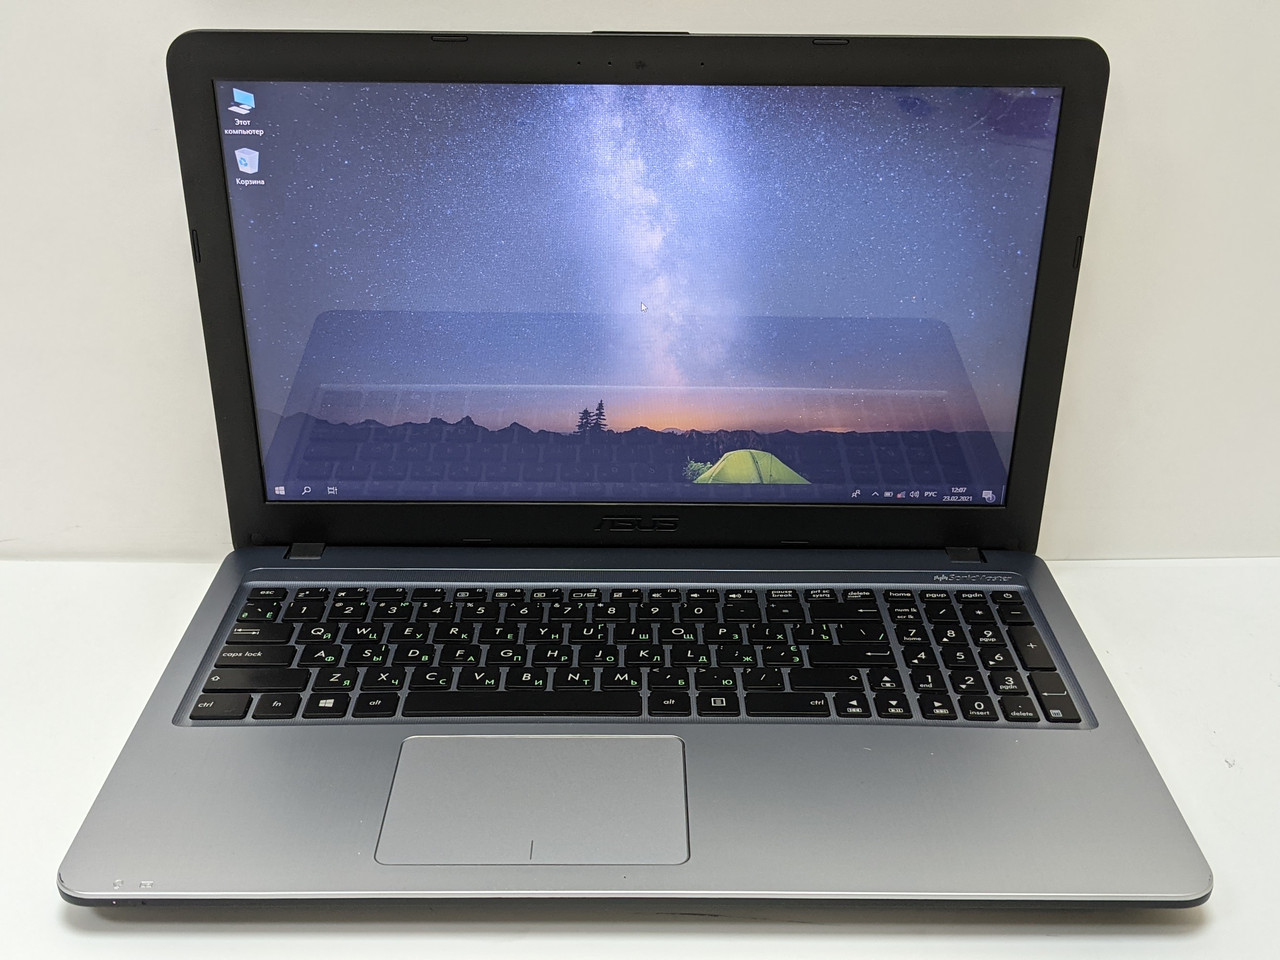 Ноутбук X540s Цена